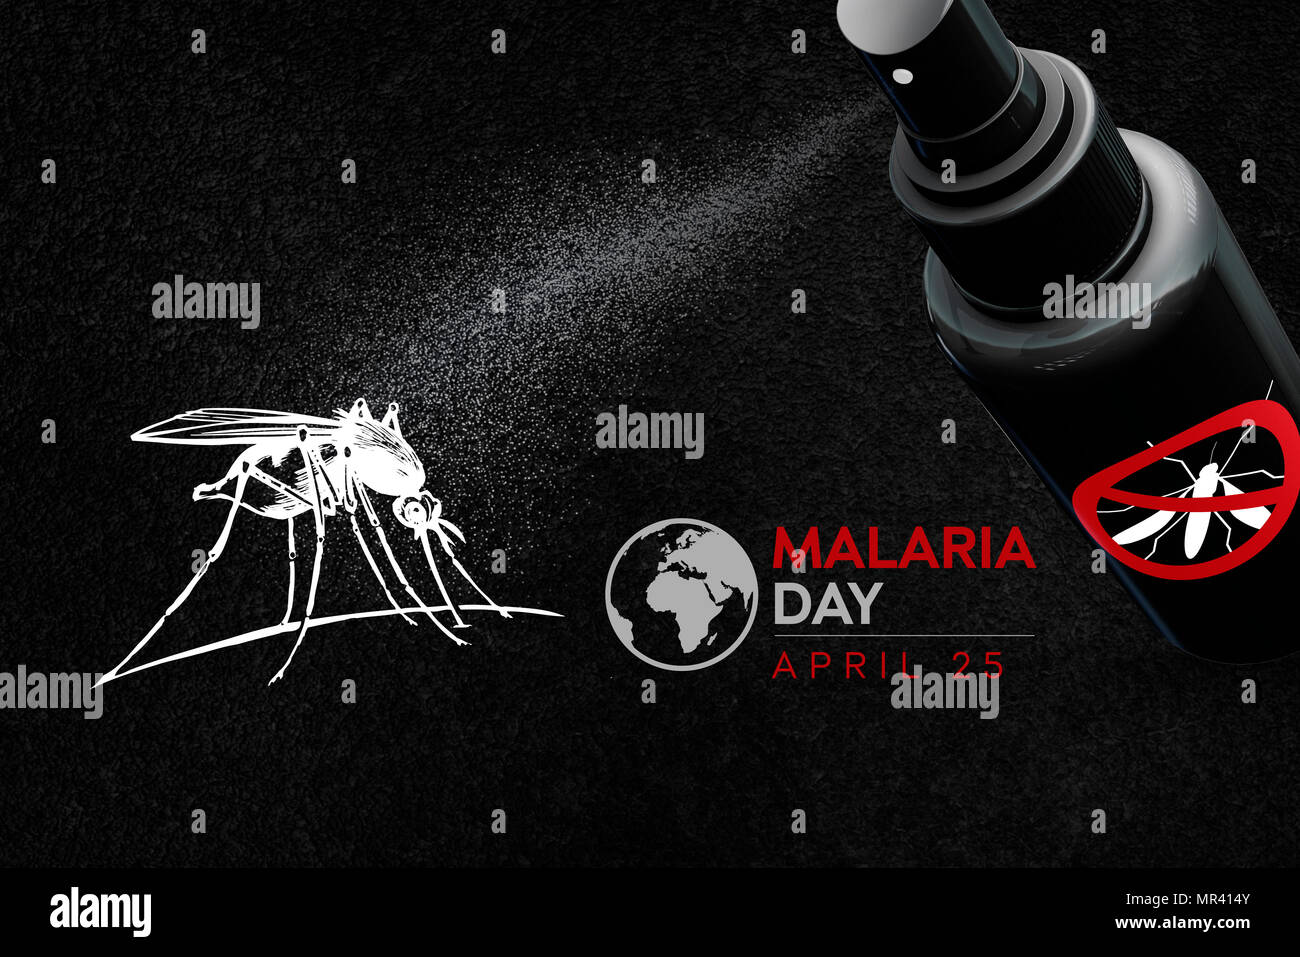 World Malaria Day - April 25 - Abbildung Stockfoto